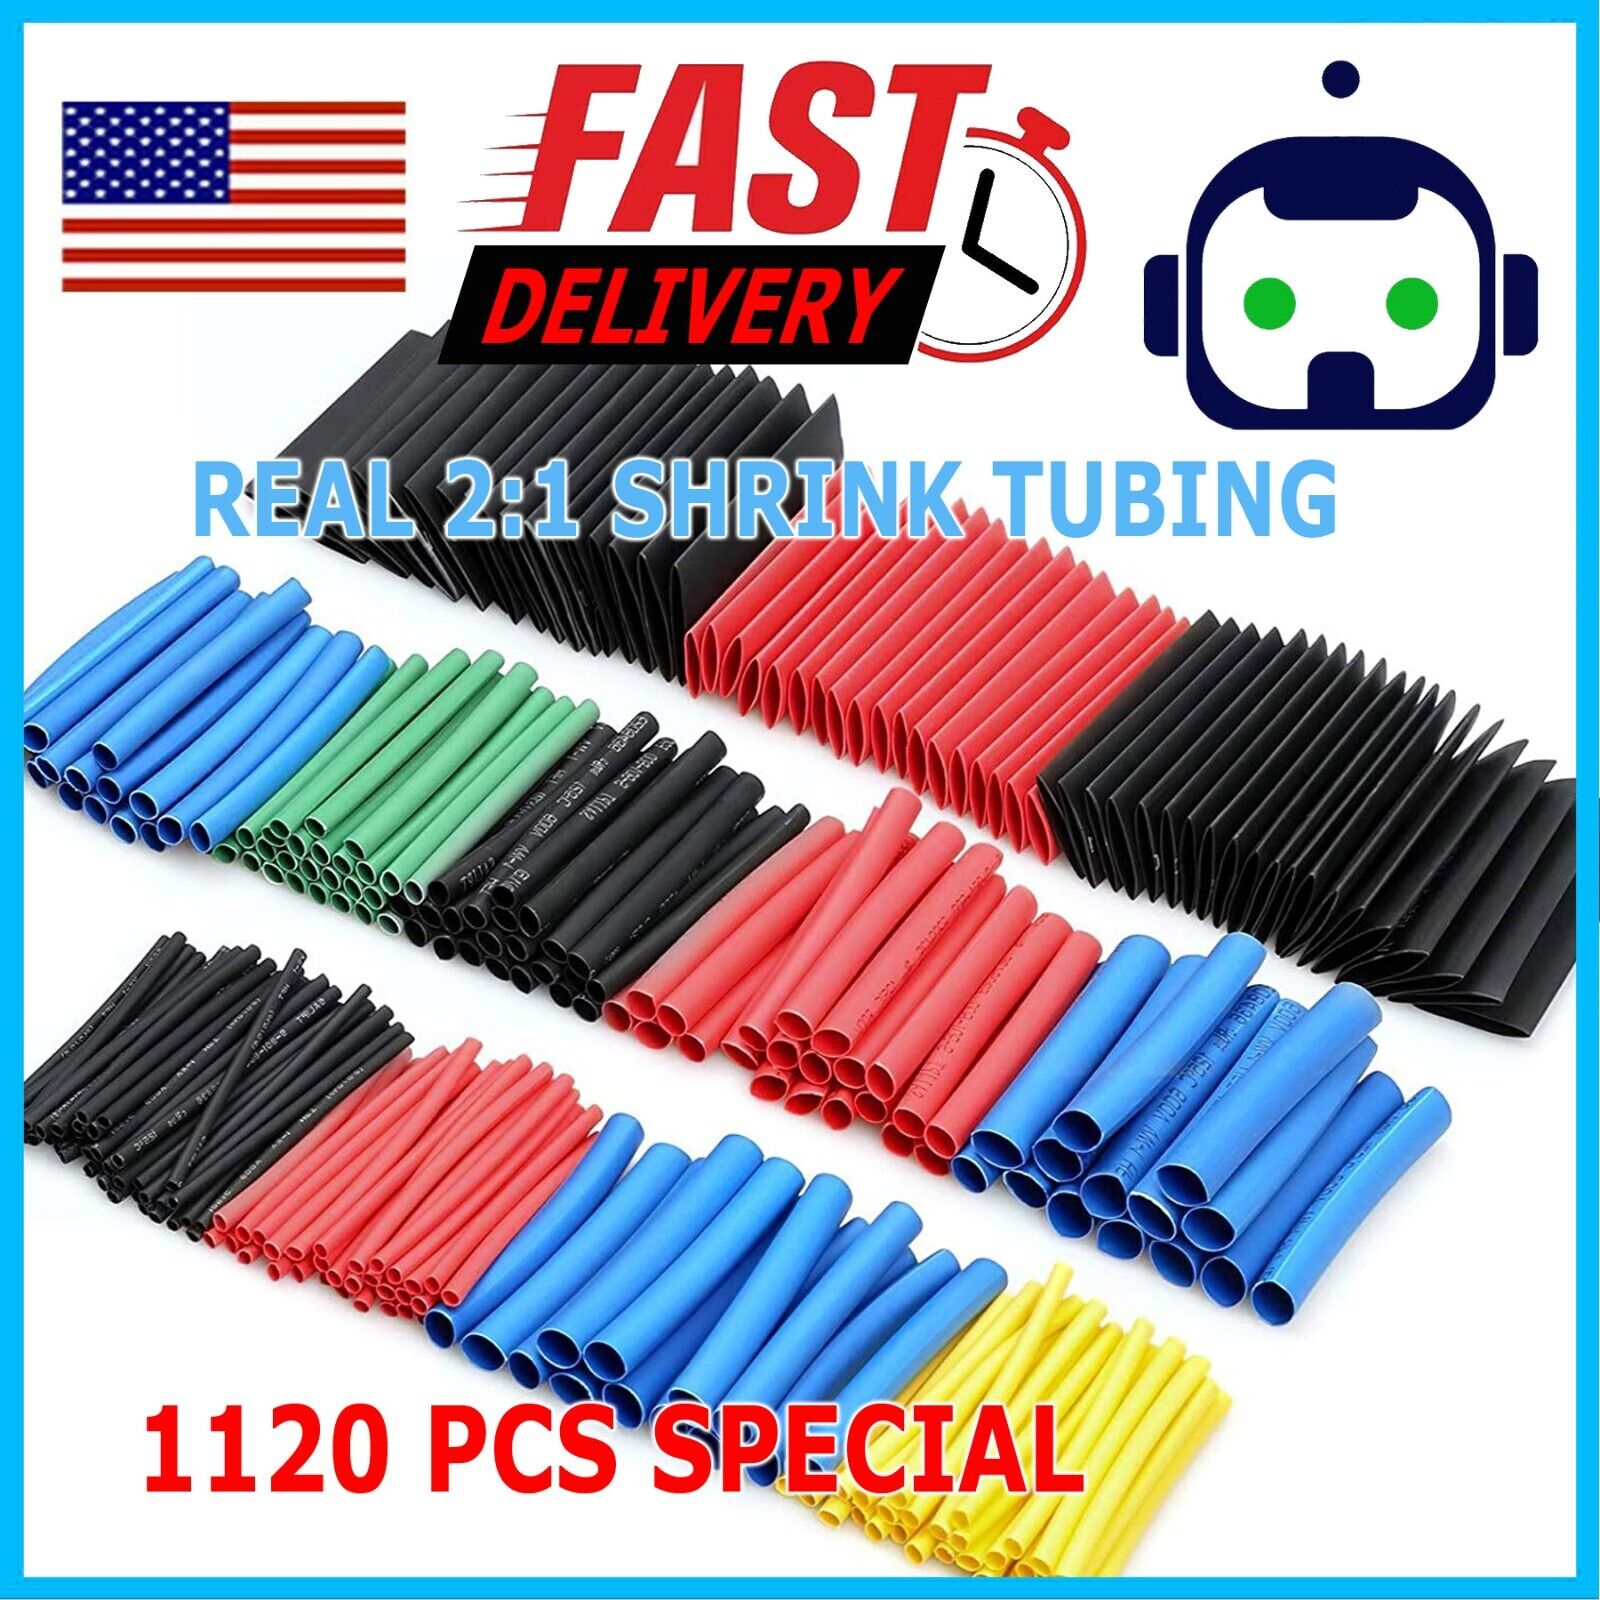 1120 Pcs Heat Shrink Tubing Sleeve 2:1 Shrinkable Tube Wire Cable Assortment Kit